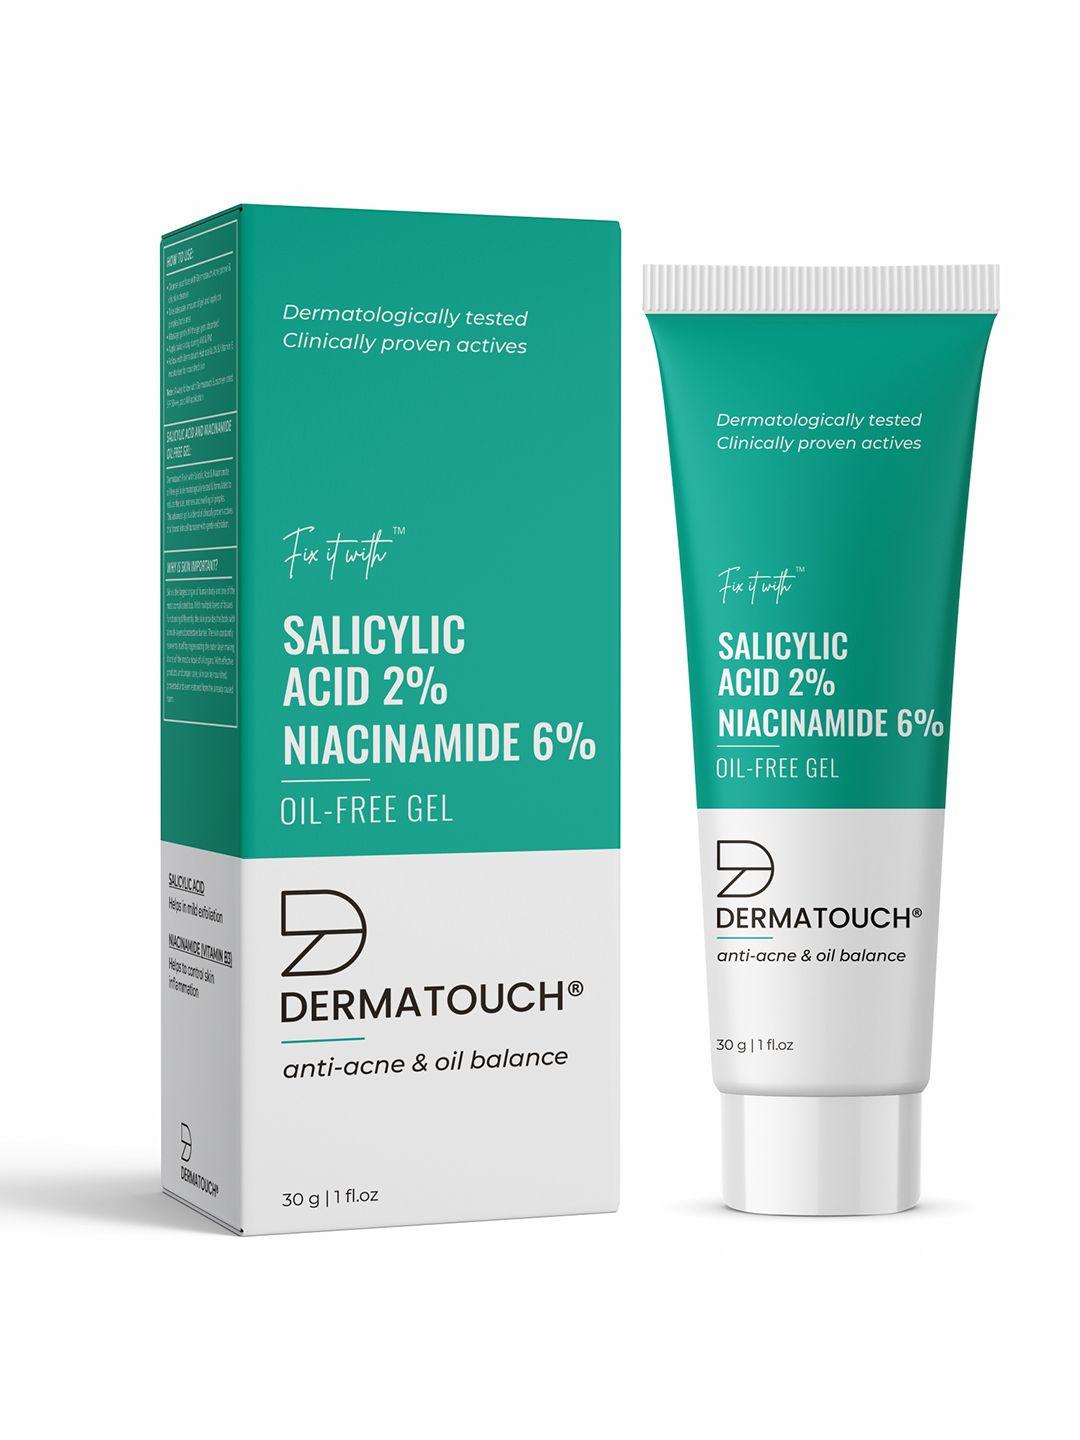 dermatouch salicylic acid 2% niacinamide 6% anti-acne oil-free gel - 30g